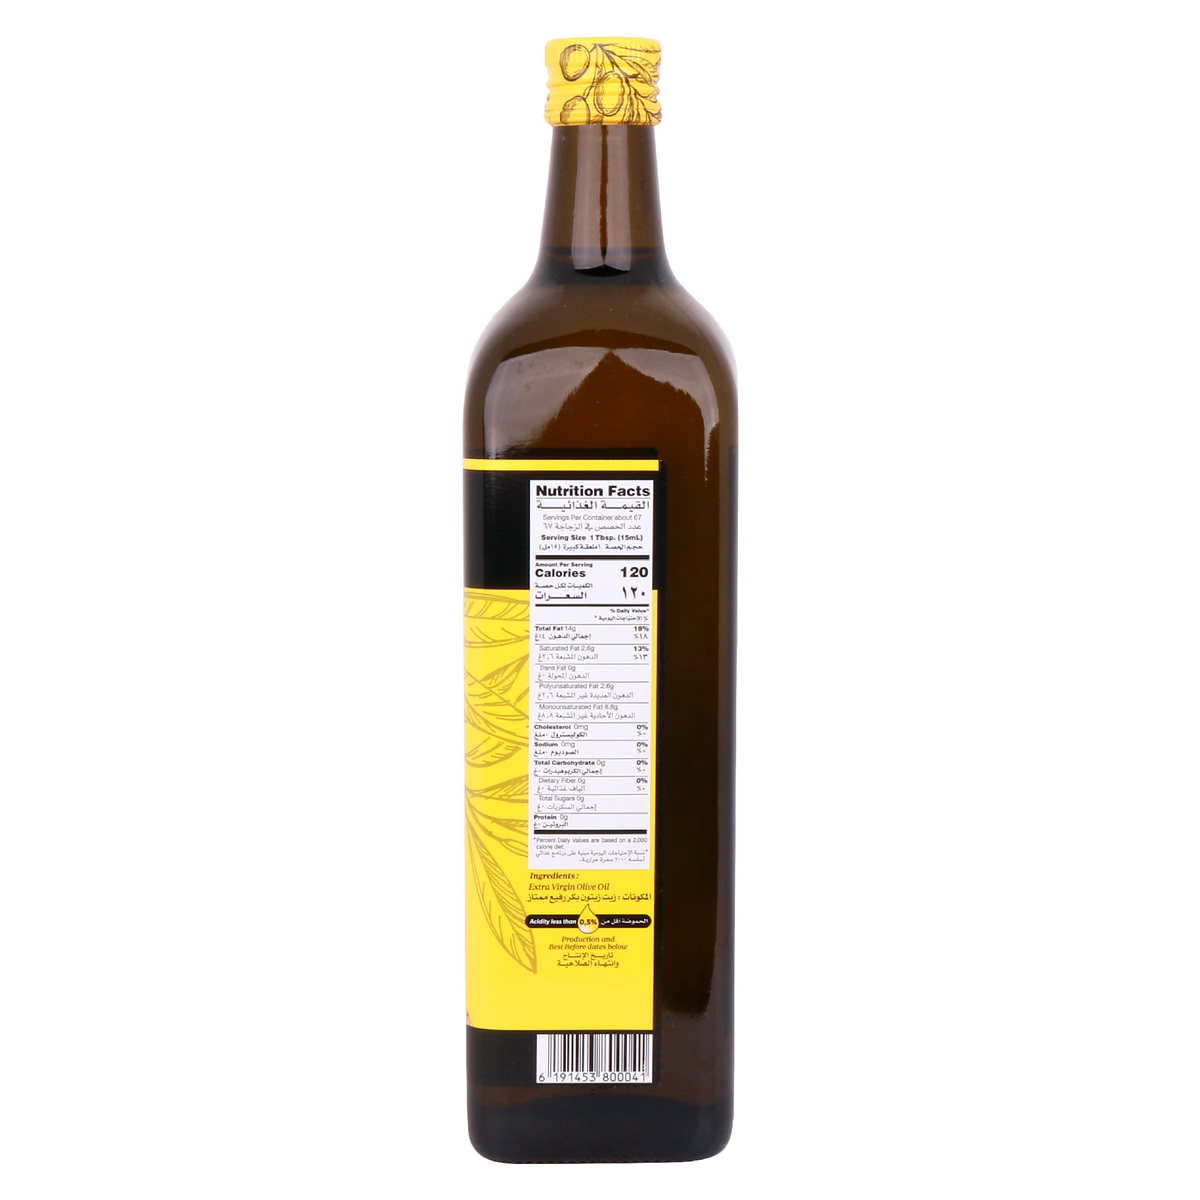 Bulla Regia Extra Virgin Olive Oil 1Litre